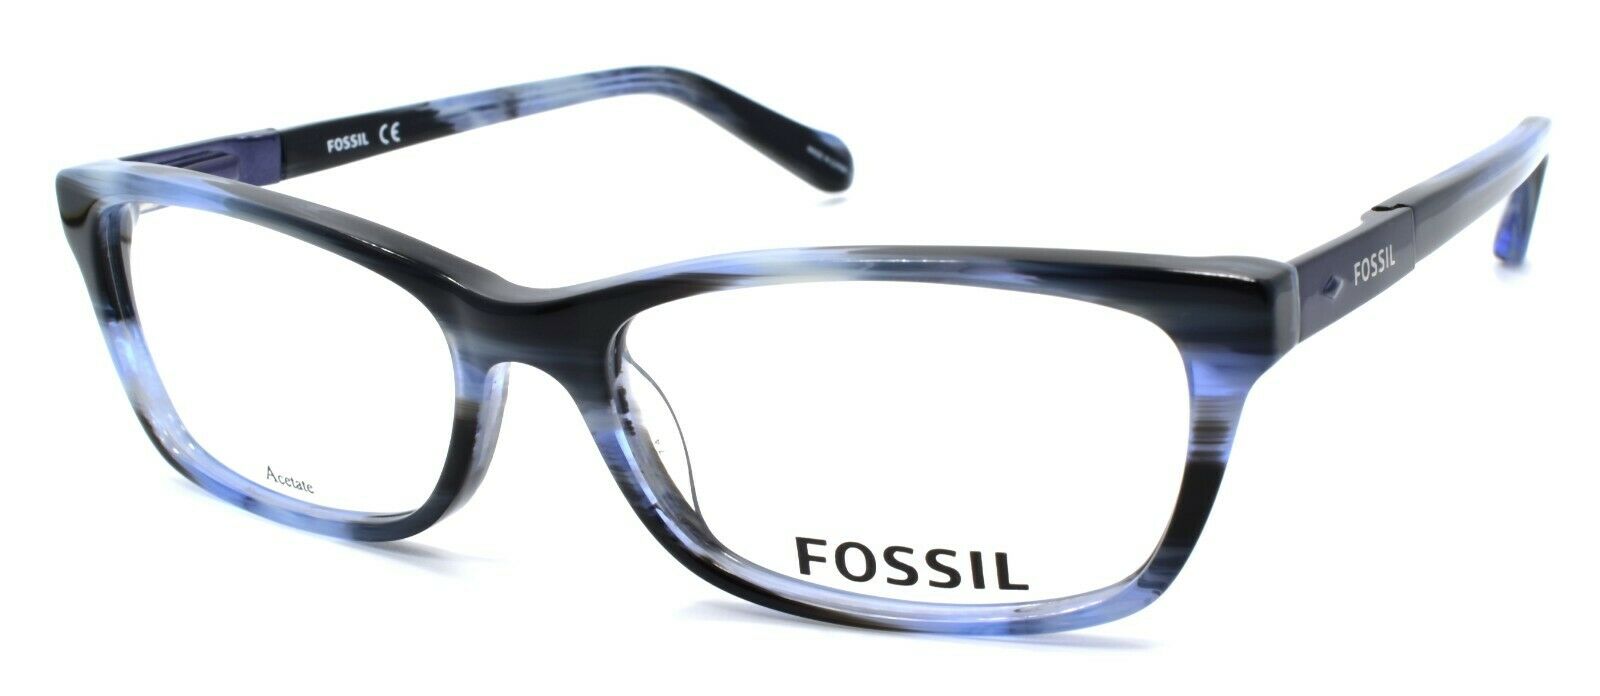 1-Fossil FOS 6049 1F0 Women's Eyeglasses Frames 53-16-140 Striated Blue-716737697849-IKSpecs